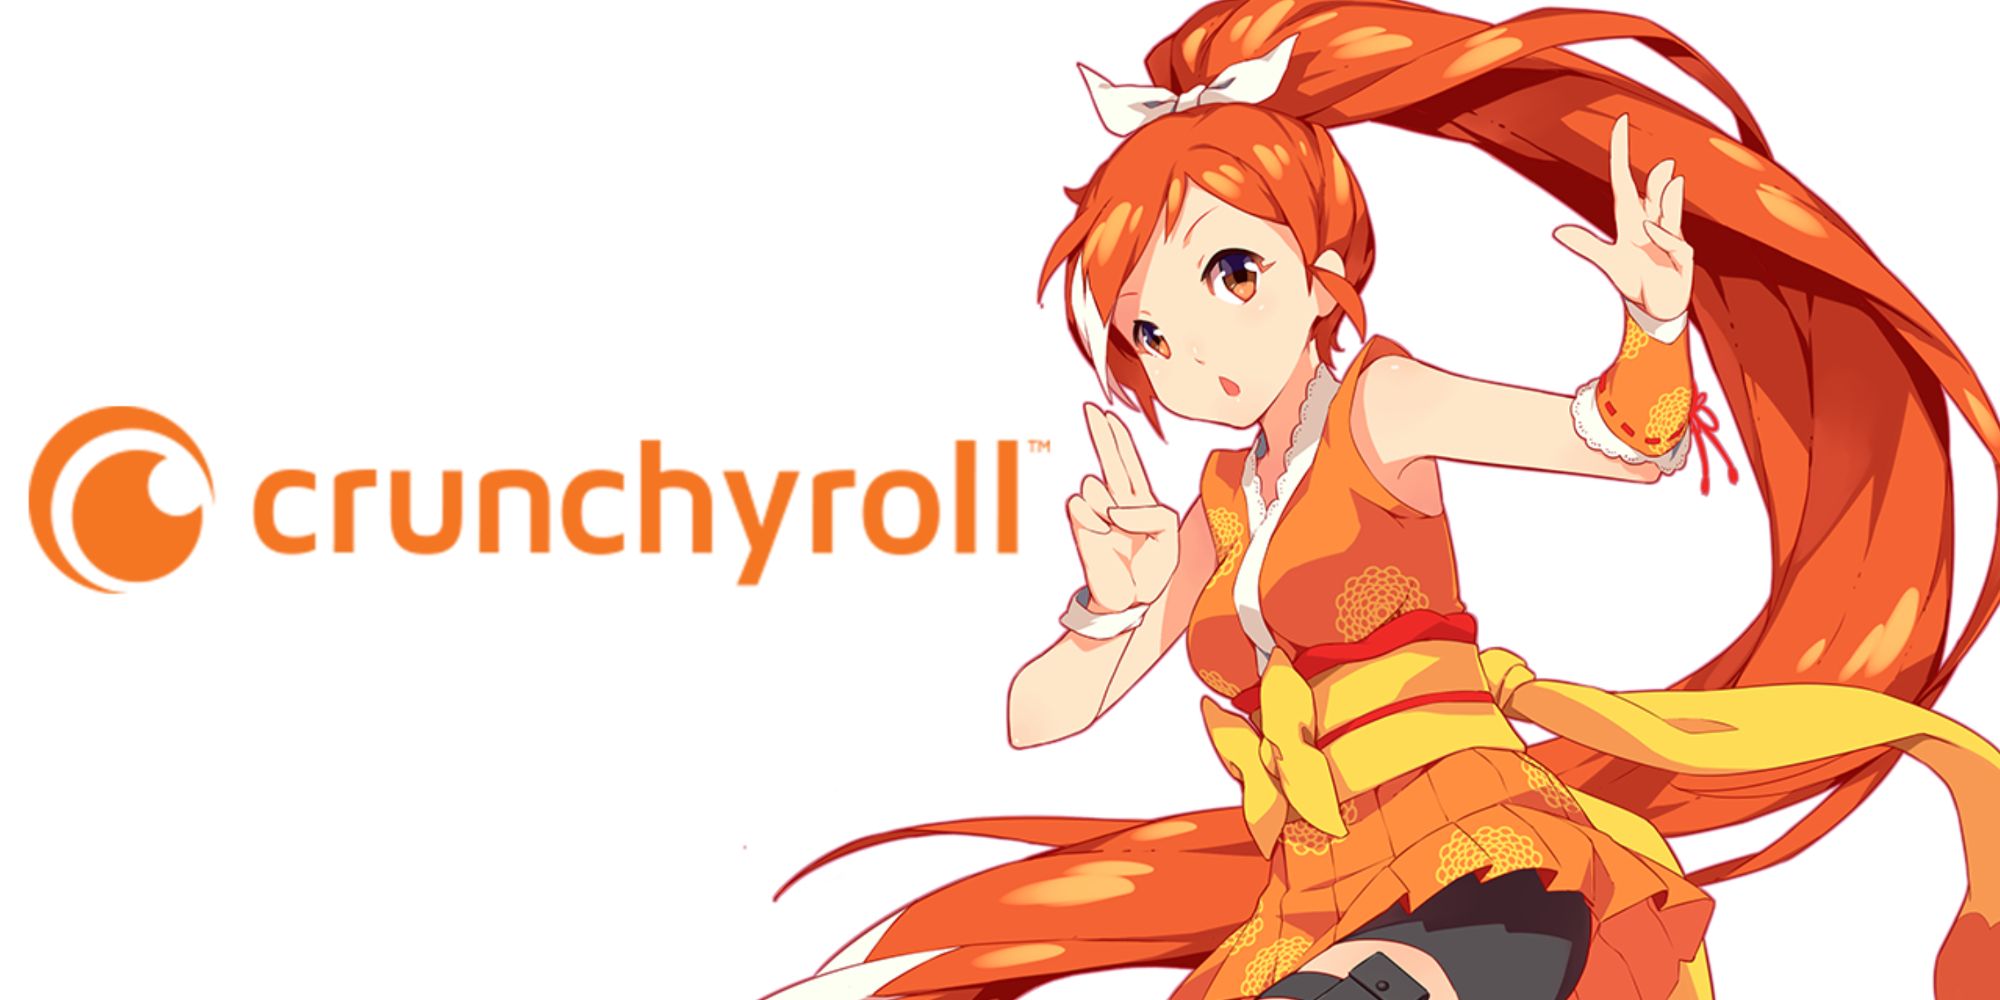 crunchyroll anime streaming platform